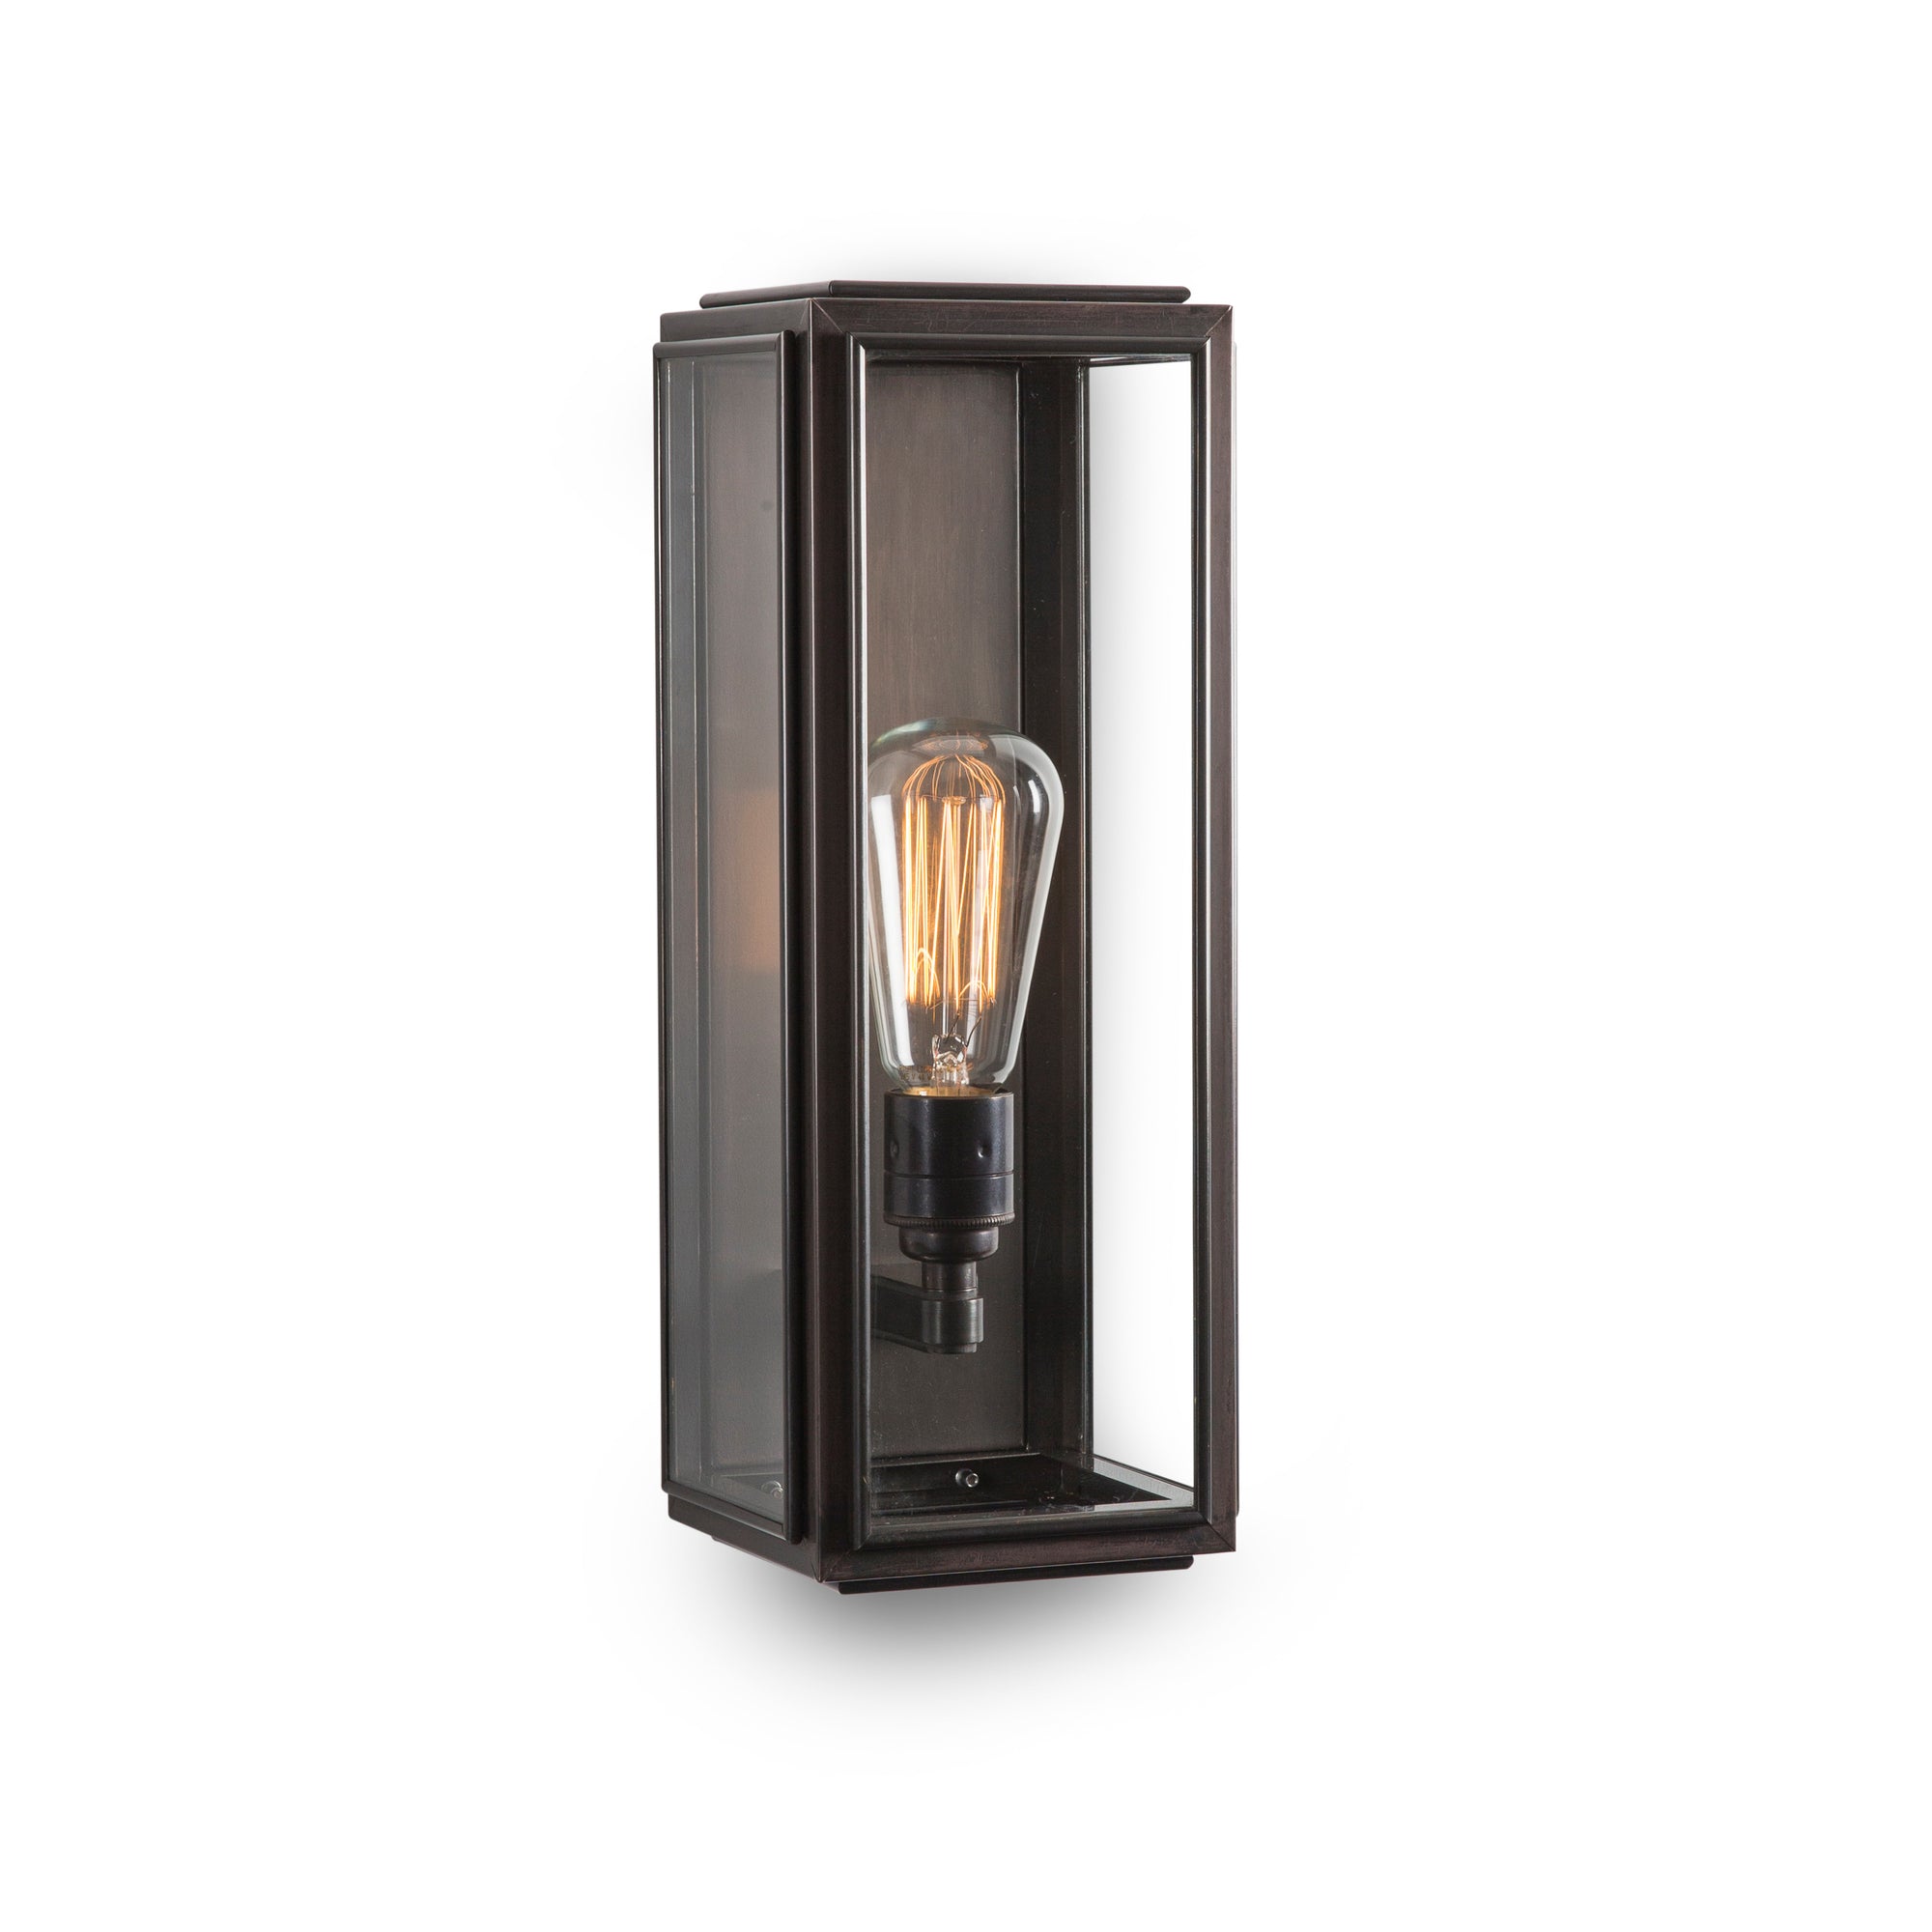 J Adams Ash Medium Wall Lantern box light in bronze with clear glass